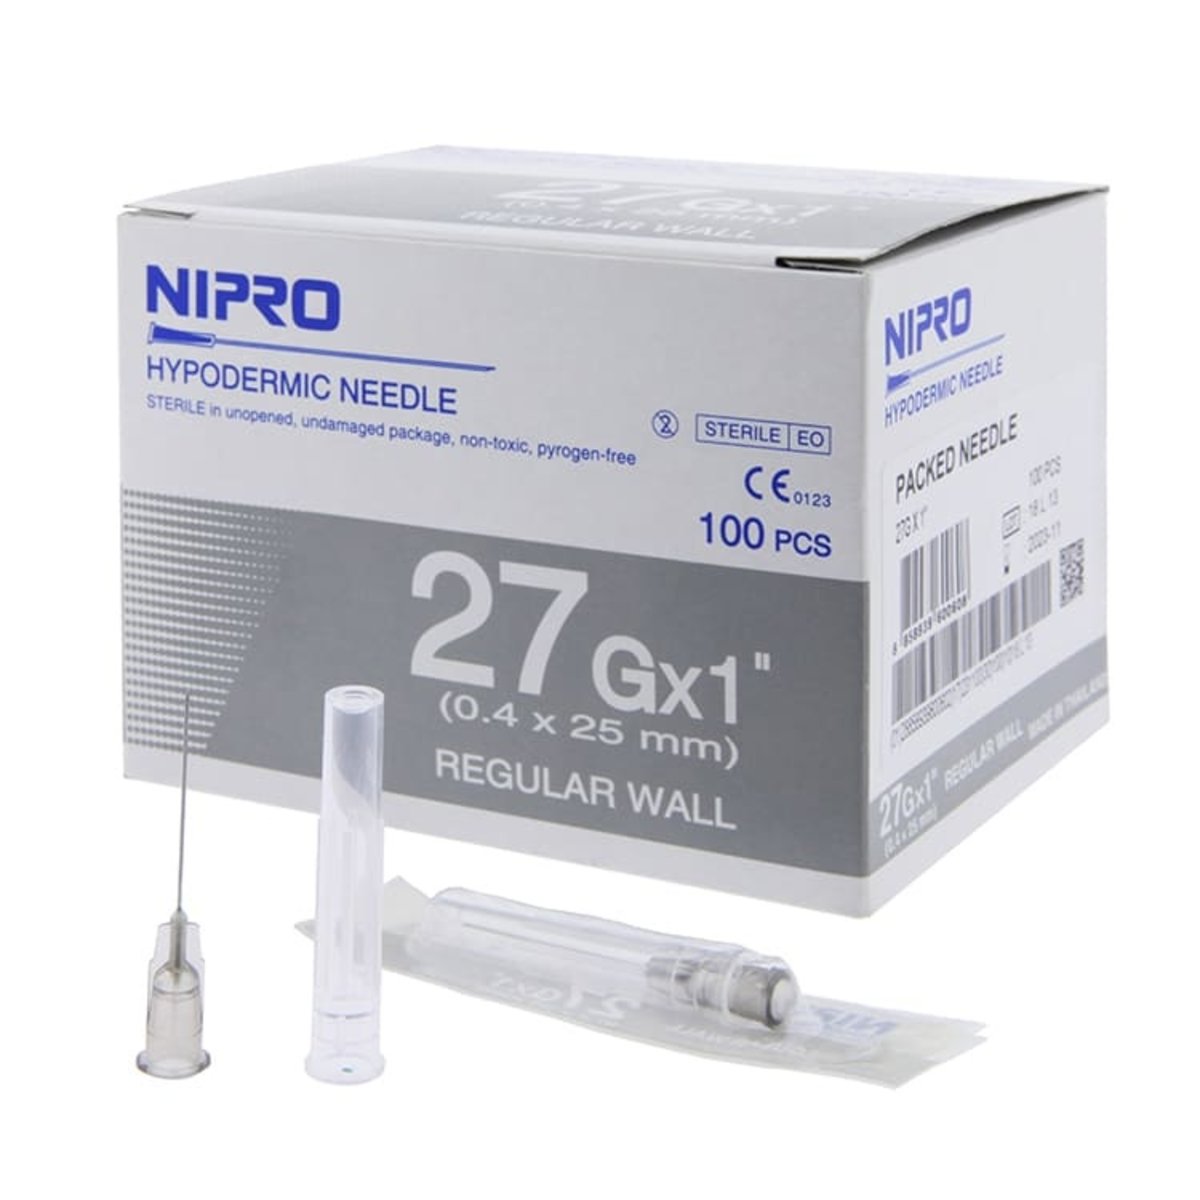 NIPRO เข็มฉีดยา ขนาด 27G x 1 นิ้ว (กล่อง)